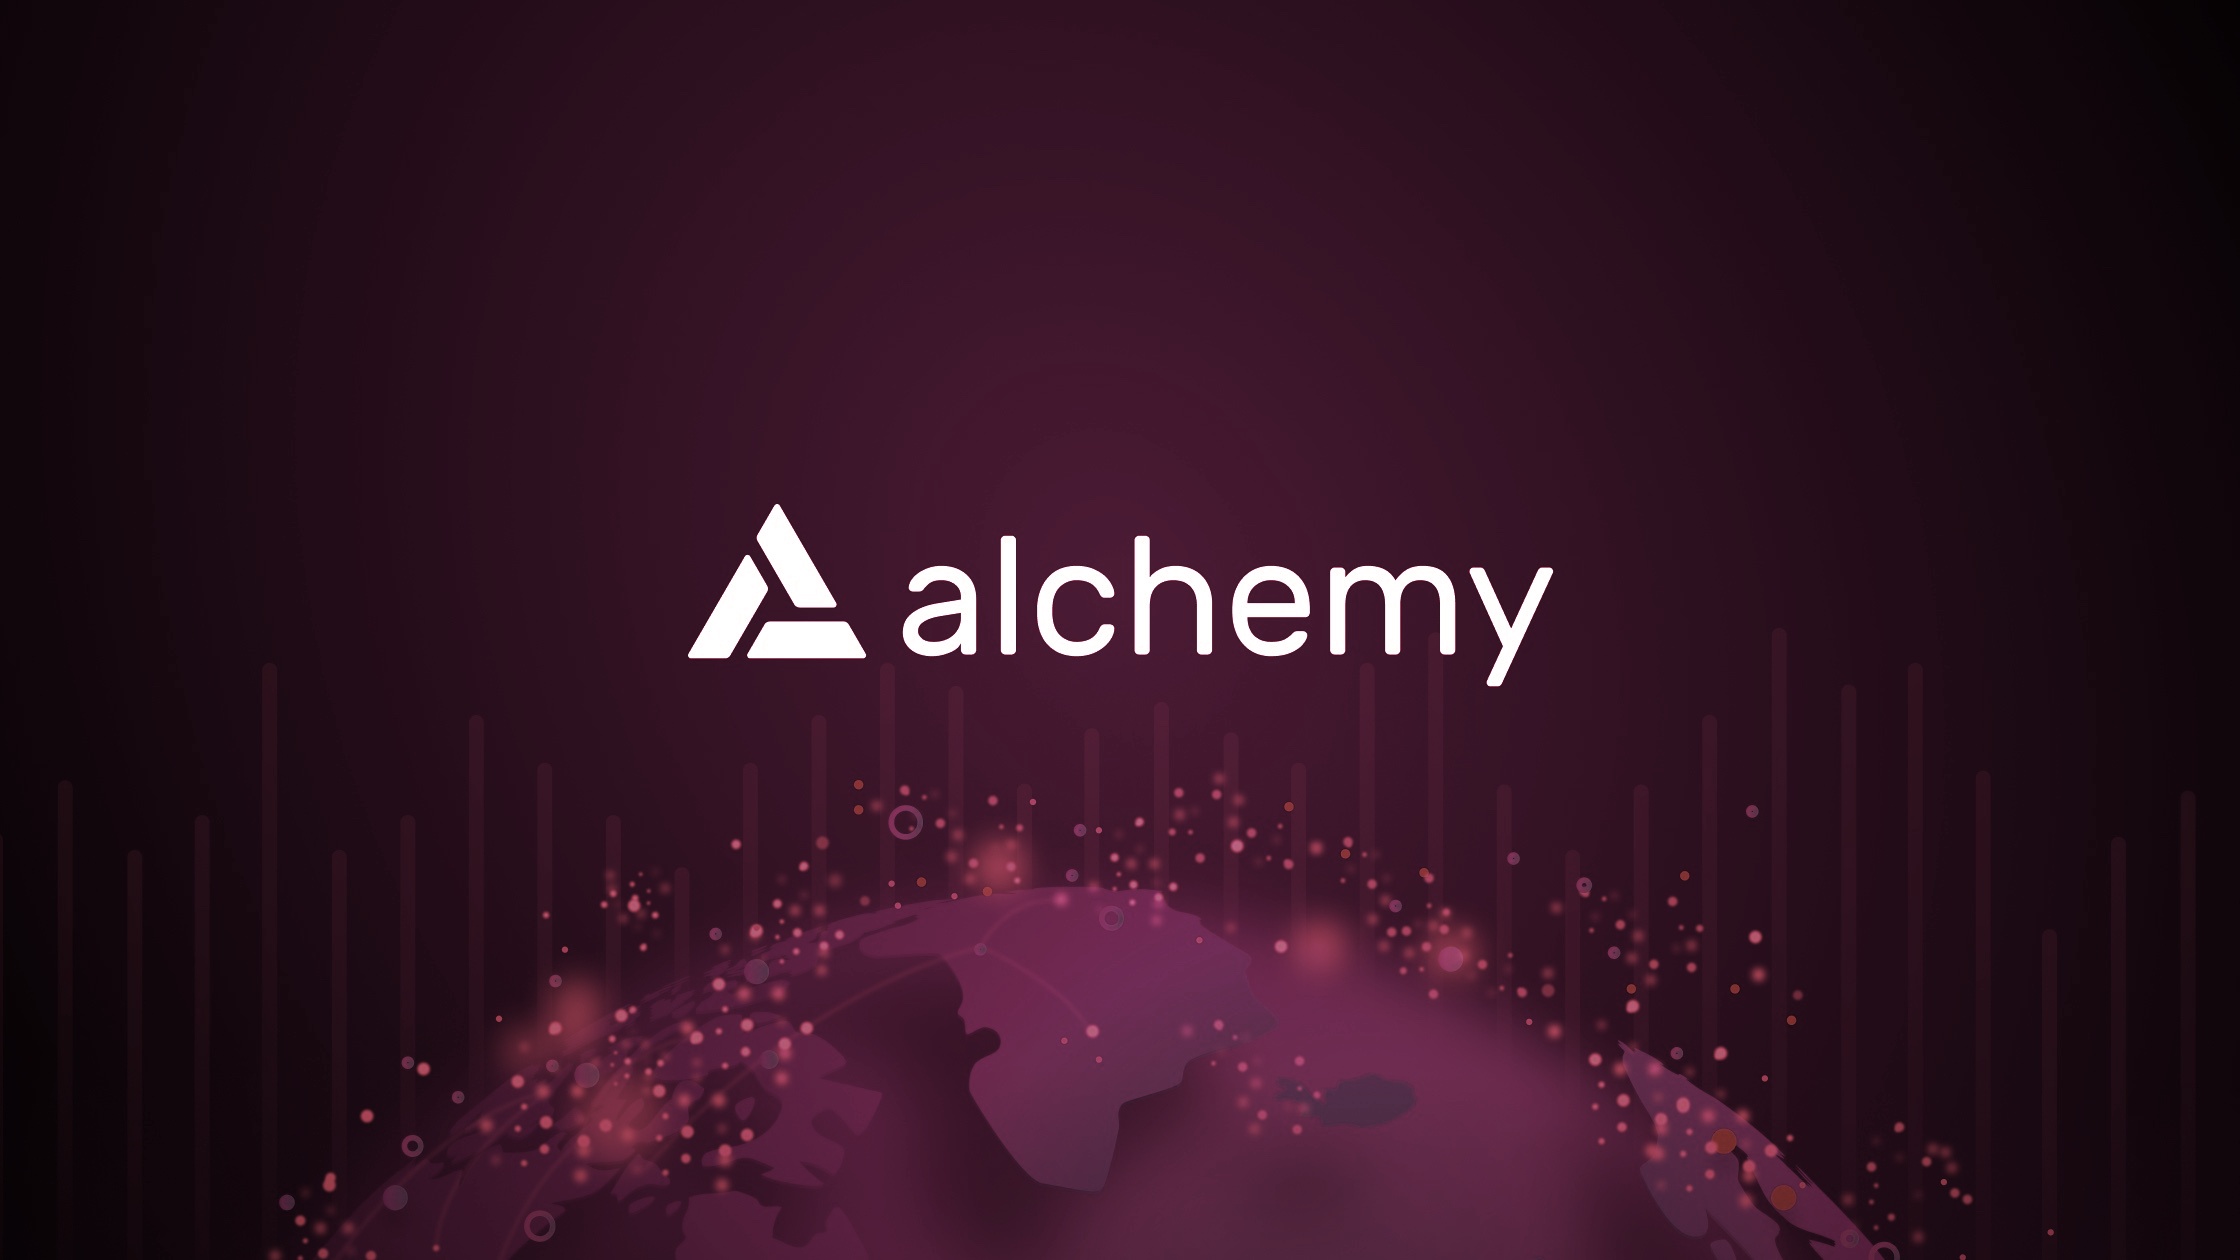 Design Alchemy Logo Concept by Daniel Patrick on Dribbble